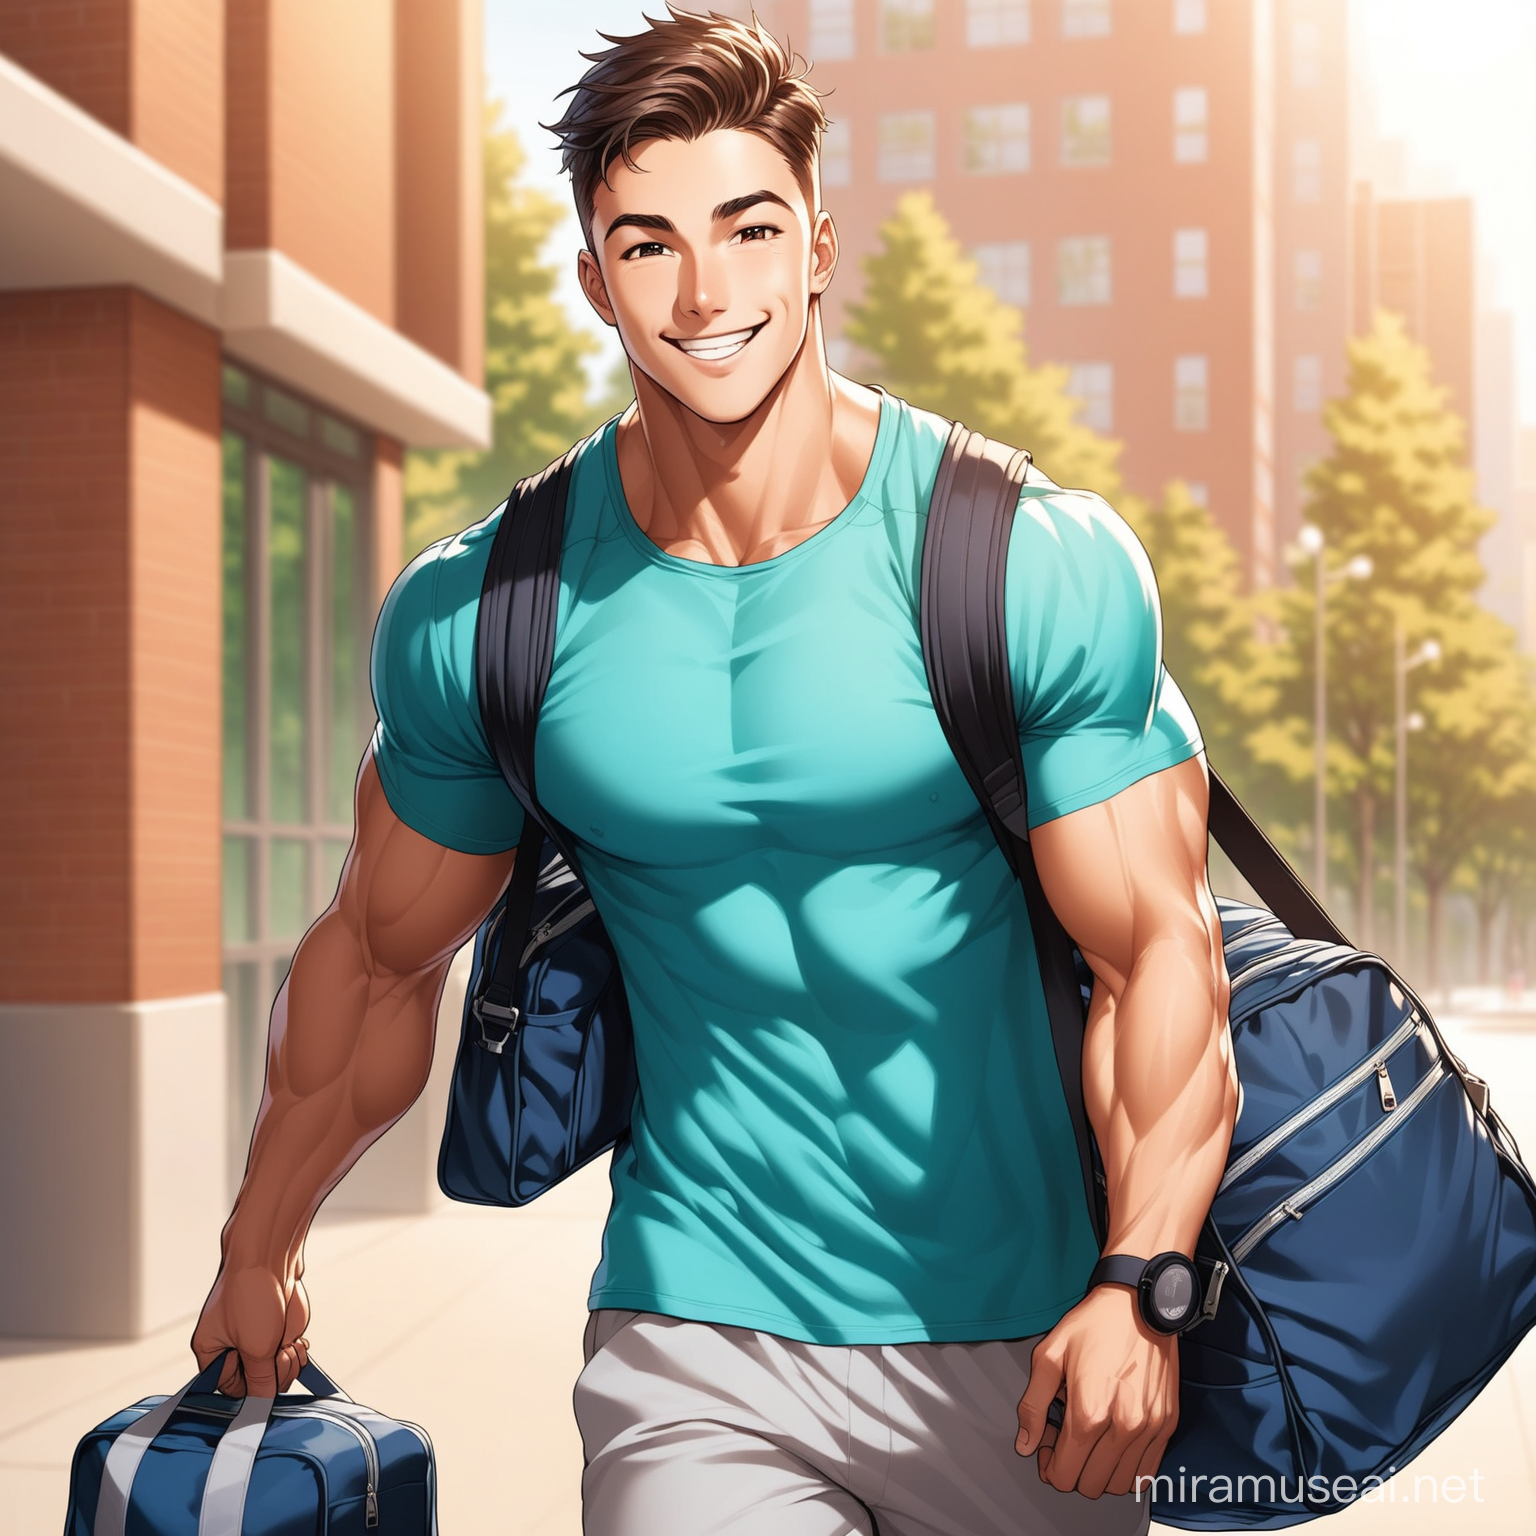 Smiling Muscular Collegebound Boy with Gym Bag